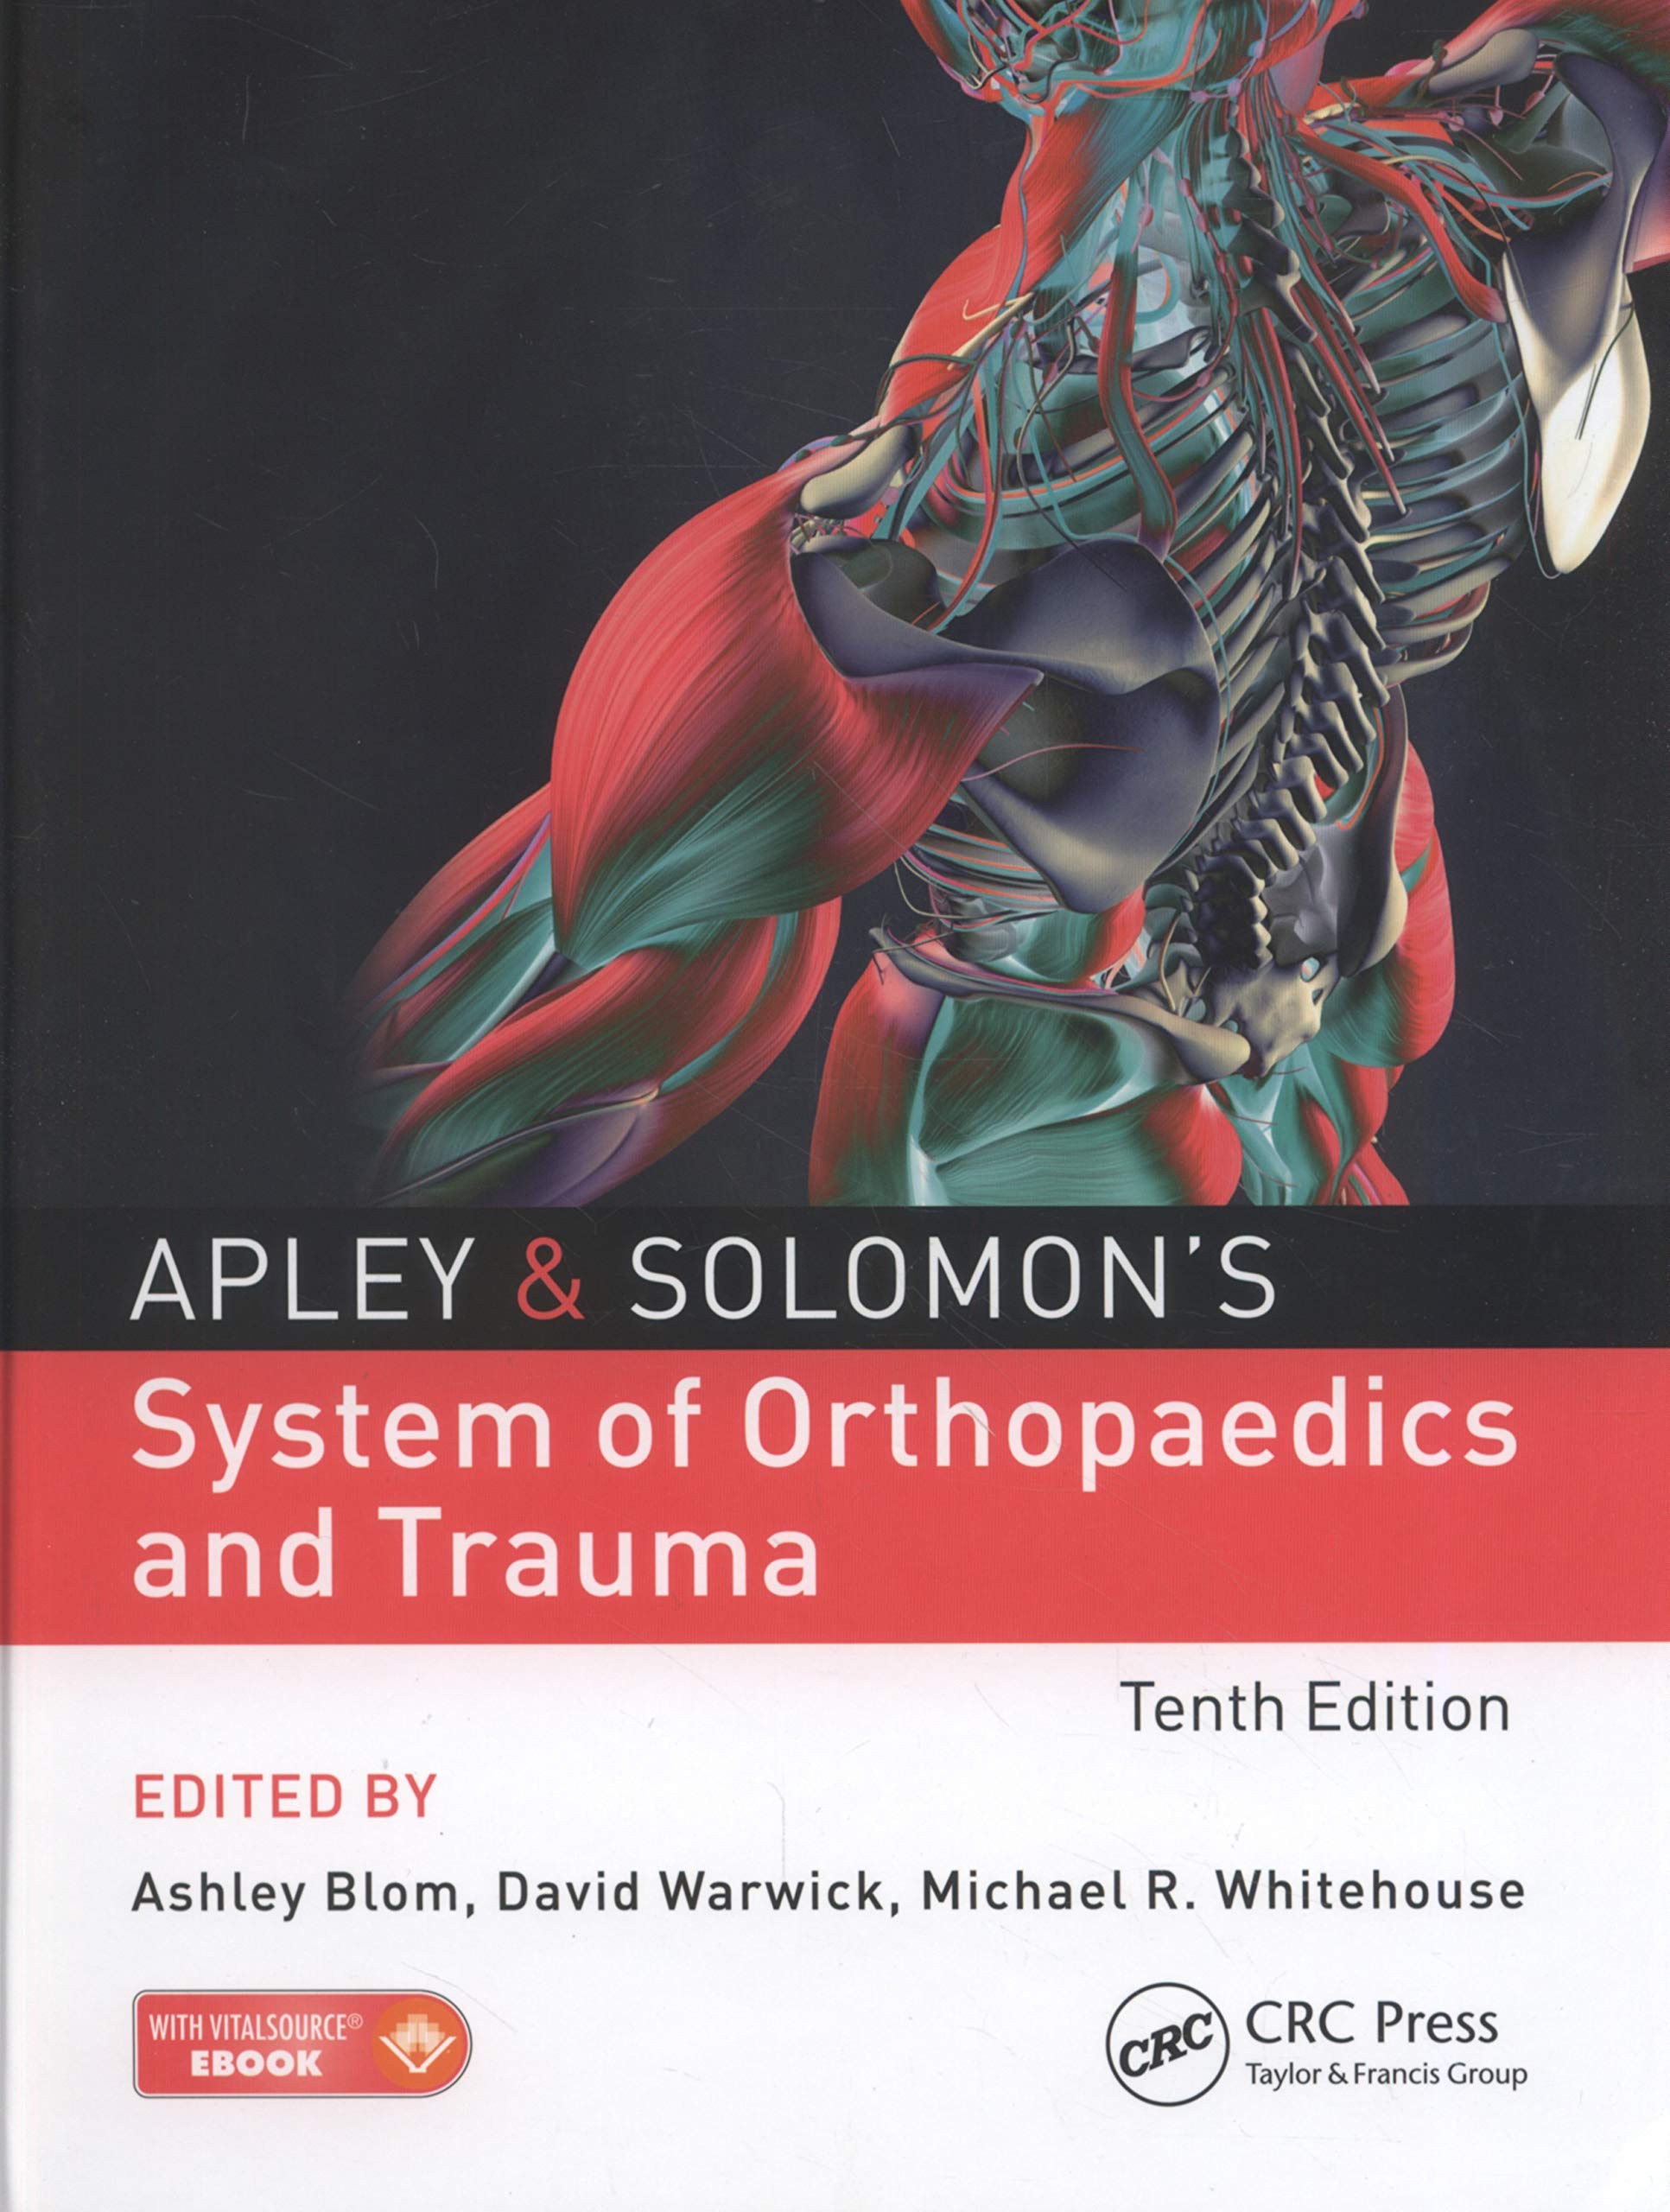 Apley & Solomon\'s System of Orthopaedics and Trauma 10th Edition | Ashley Blom, David Warwick